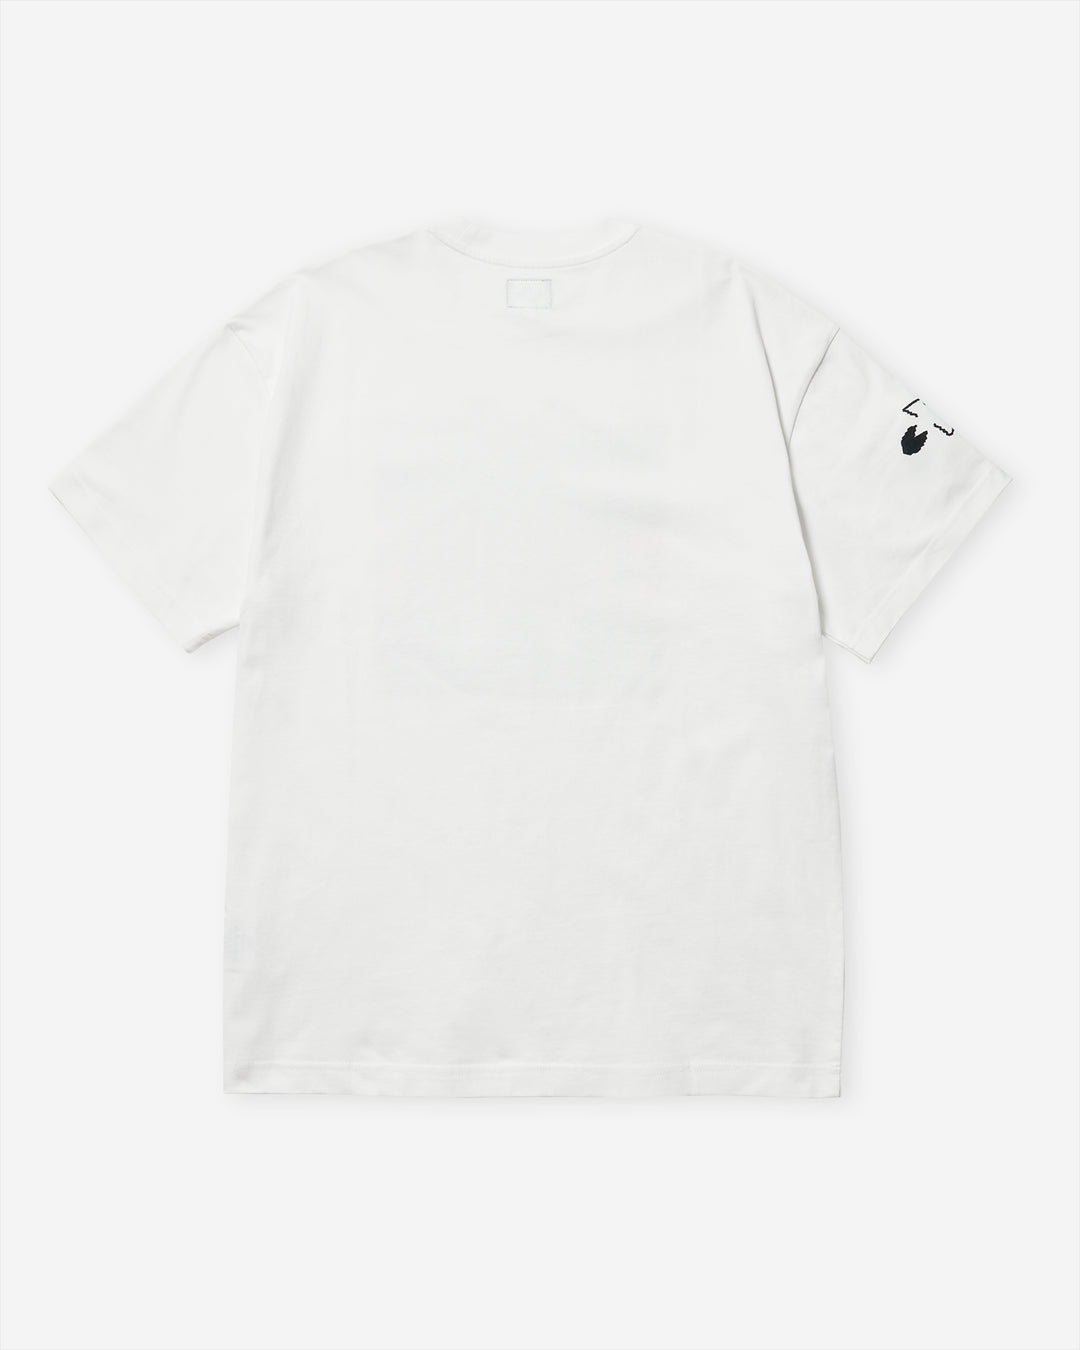 Spectrum Block Filter T-Shirt - White